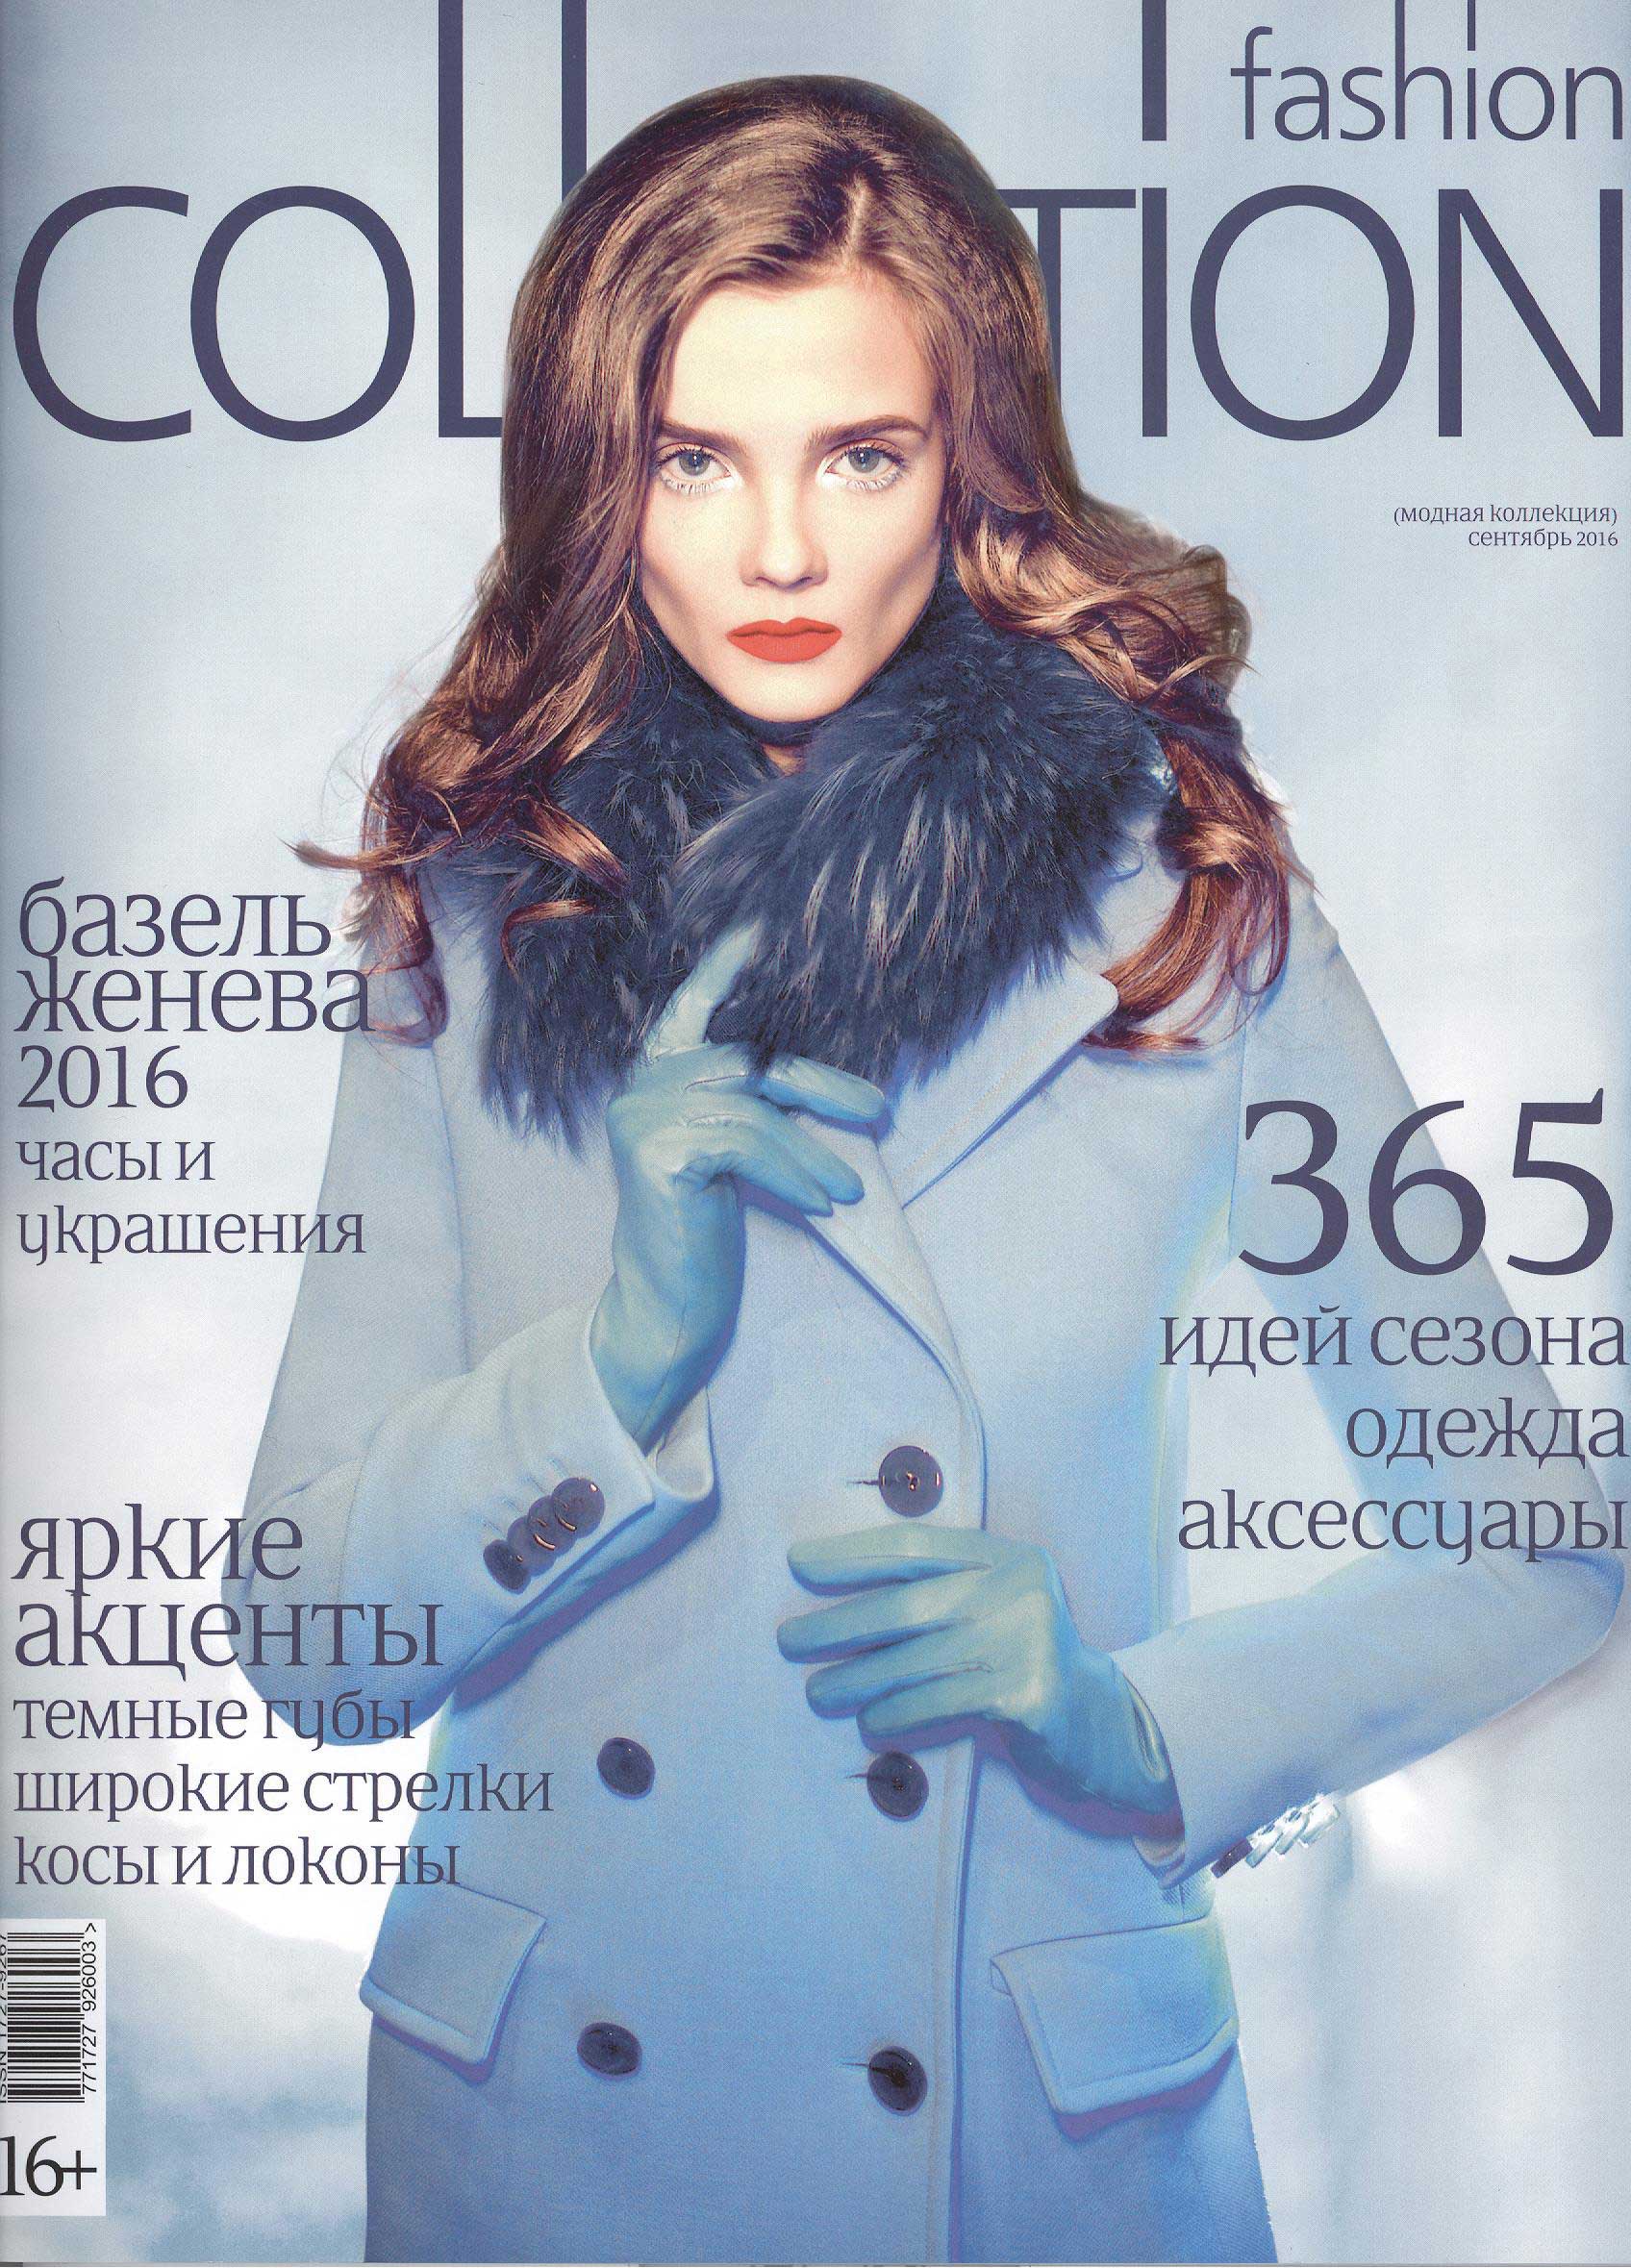 Collection журнал. Фэшн журналы. Fashion collection. Страница фэшн журнала. Fashion collection Пенза.